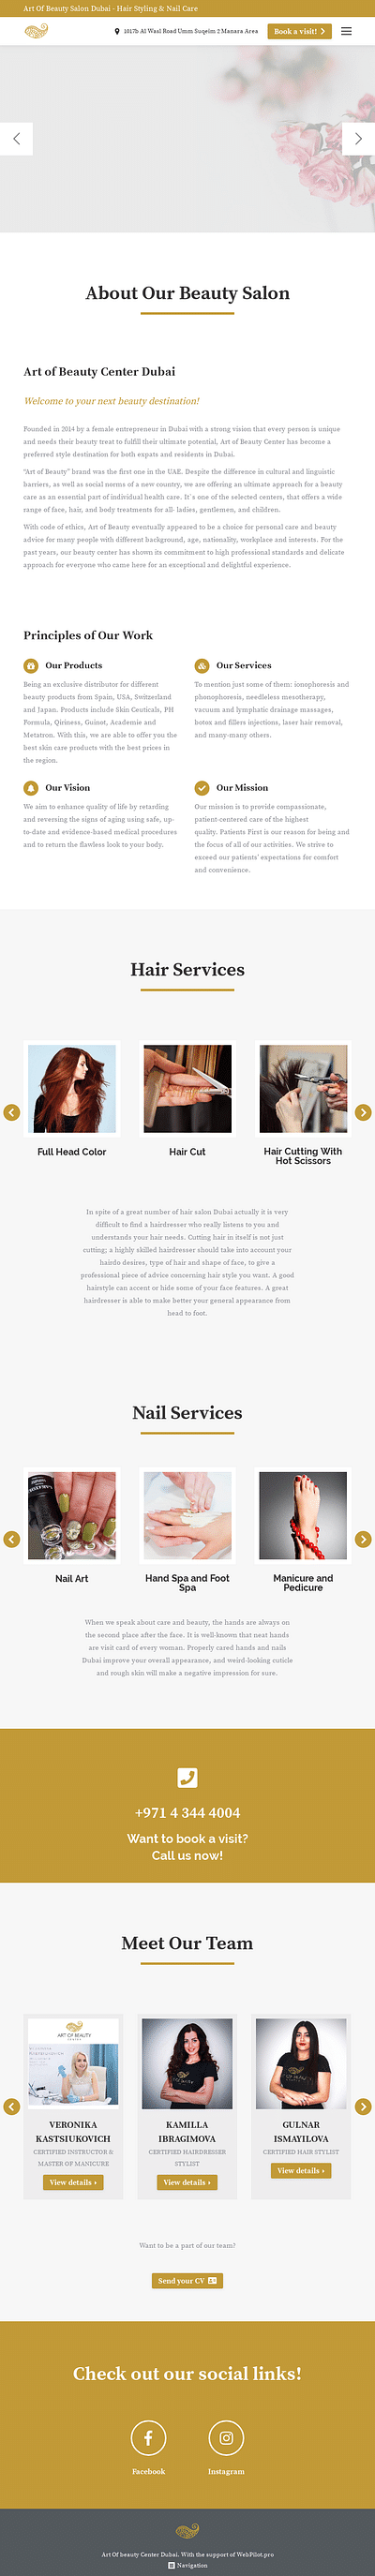 nails and hair artofbeautycenter - Website Creatie